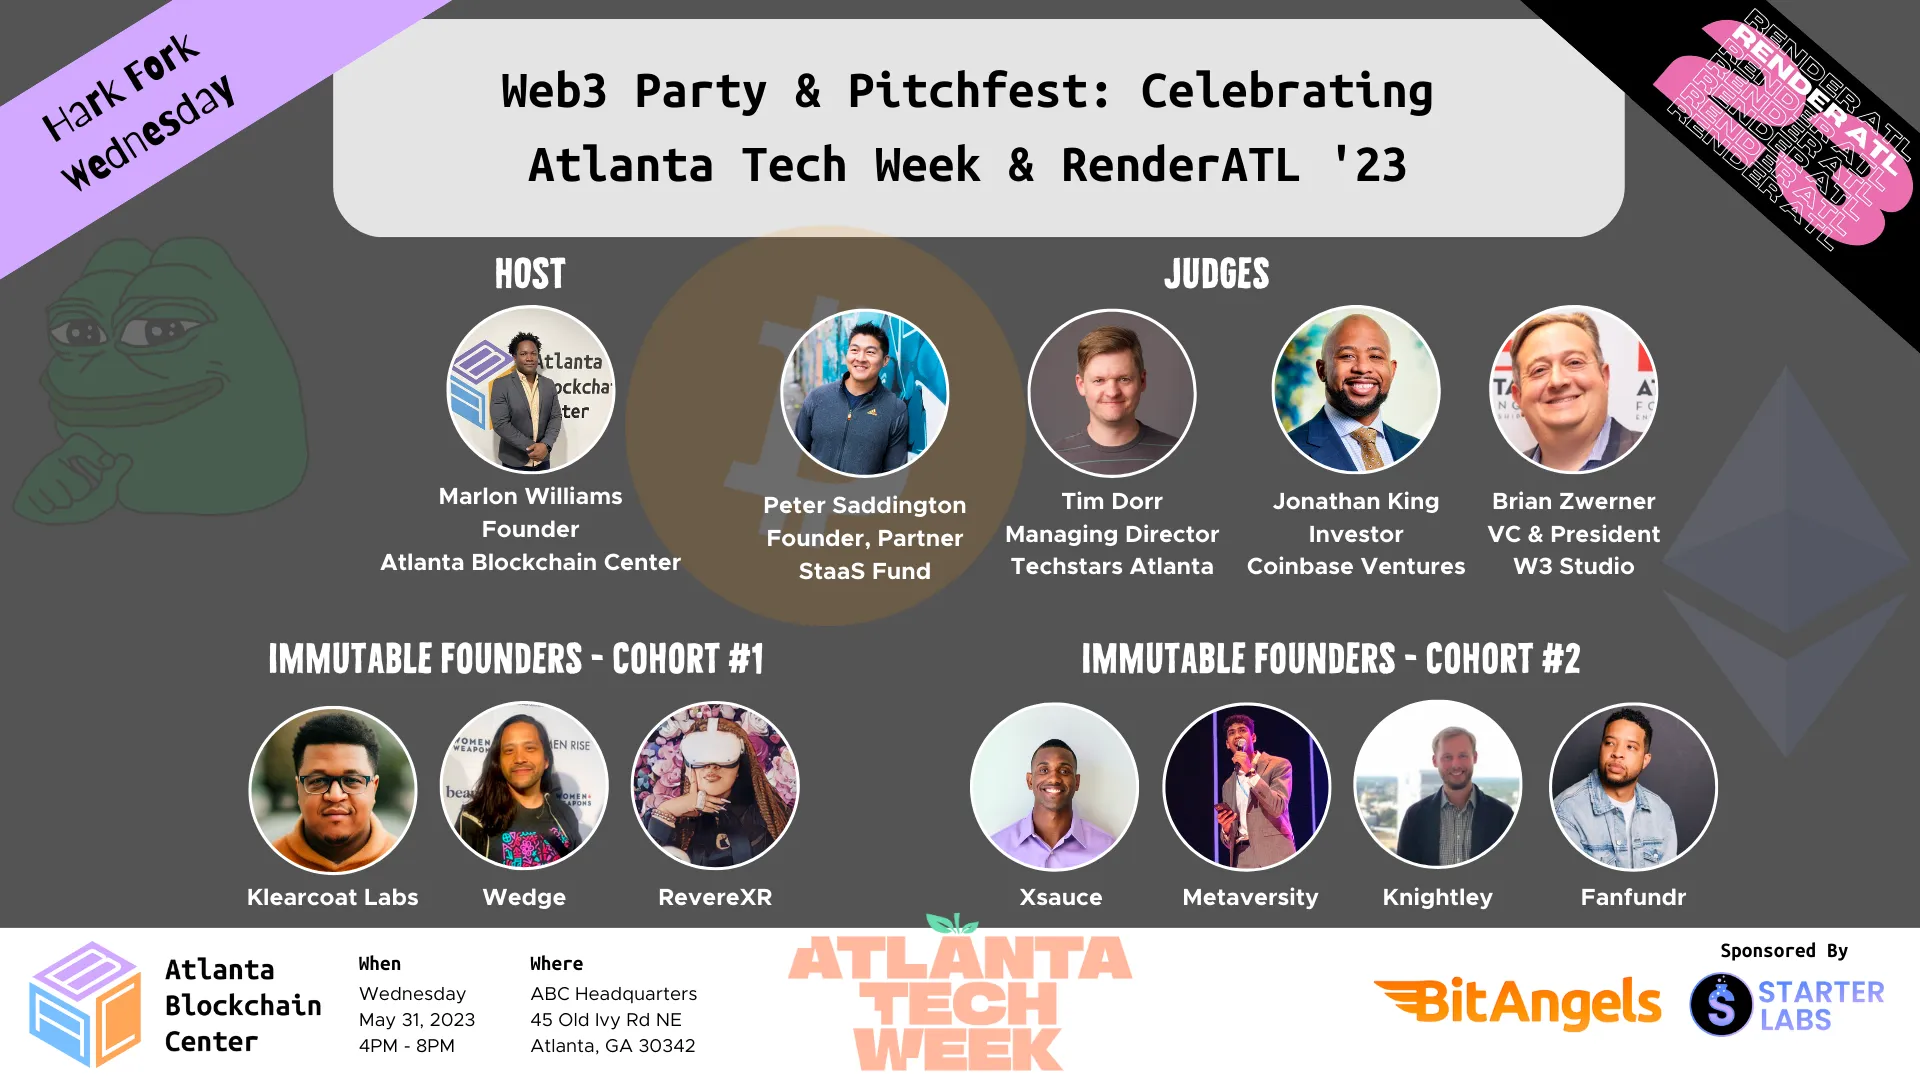 Web3 Party & Pitchfest: Celebrating Atlanta Tech Week & RenderATL ’23